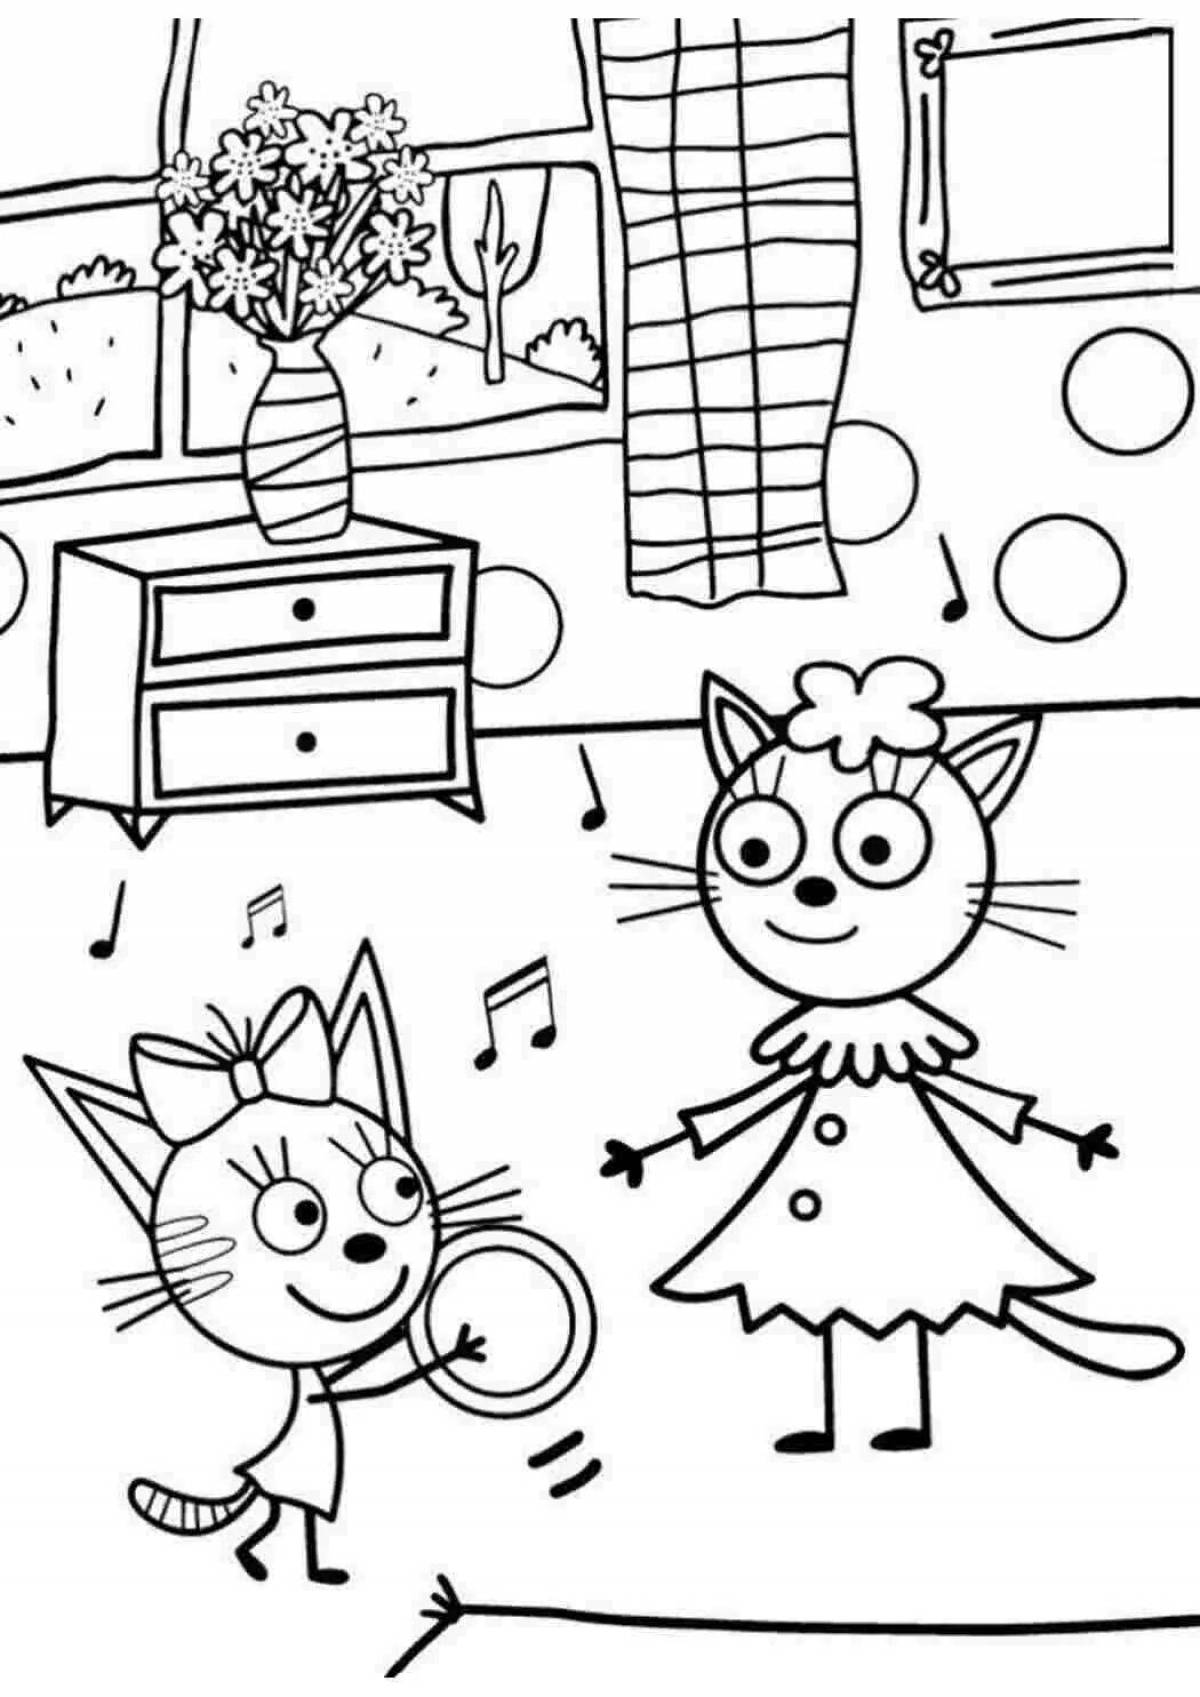 Funny three cats cartoon coloring book